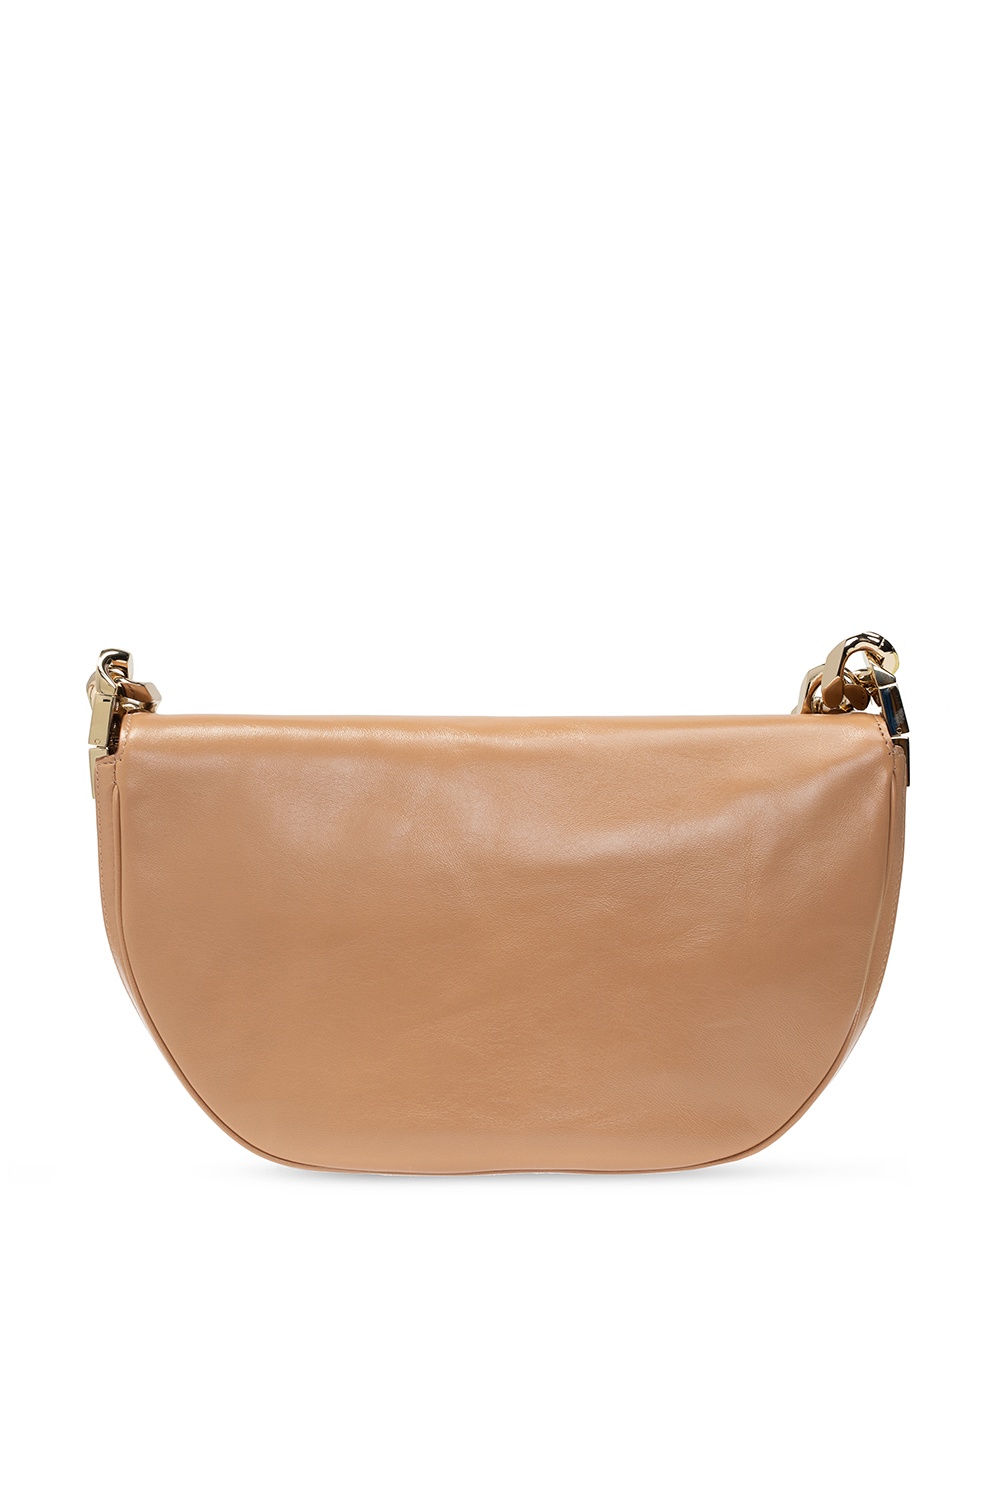 Burberry ‘Olympia’ shoulder bag